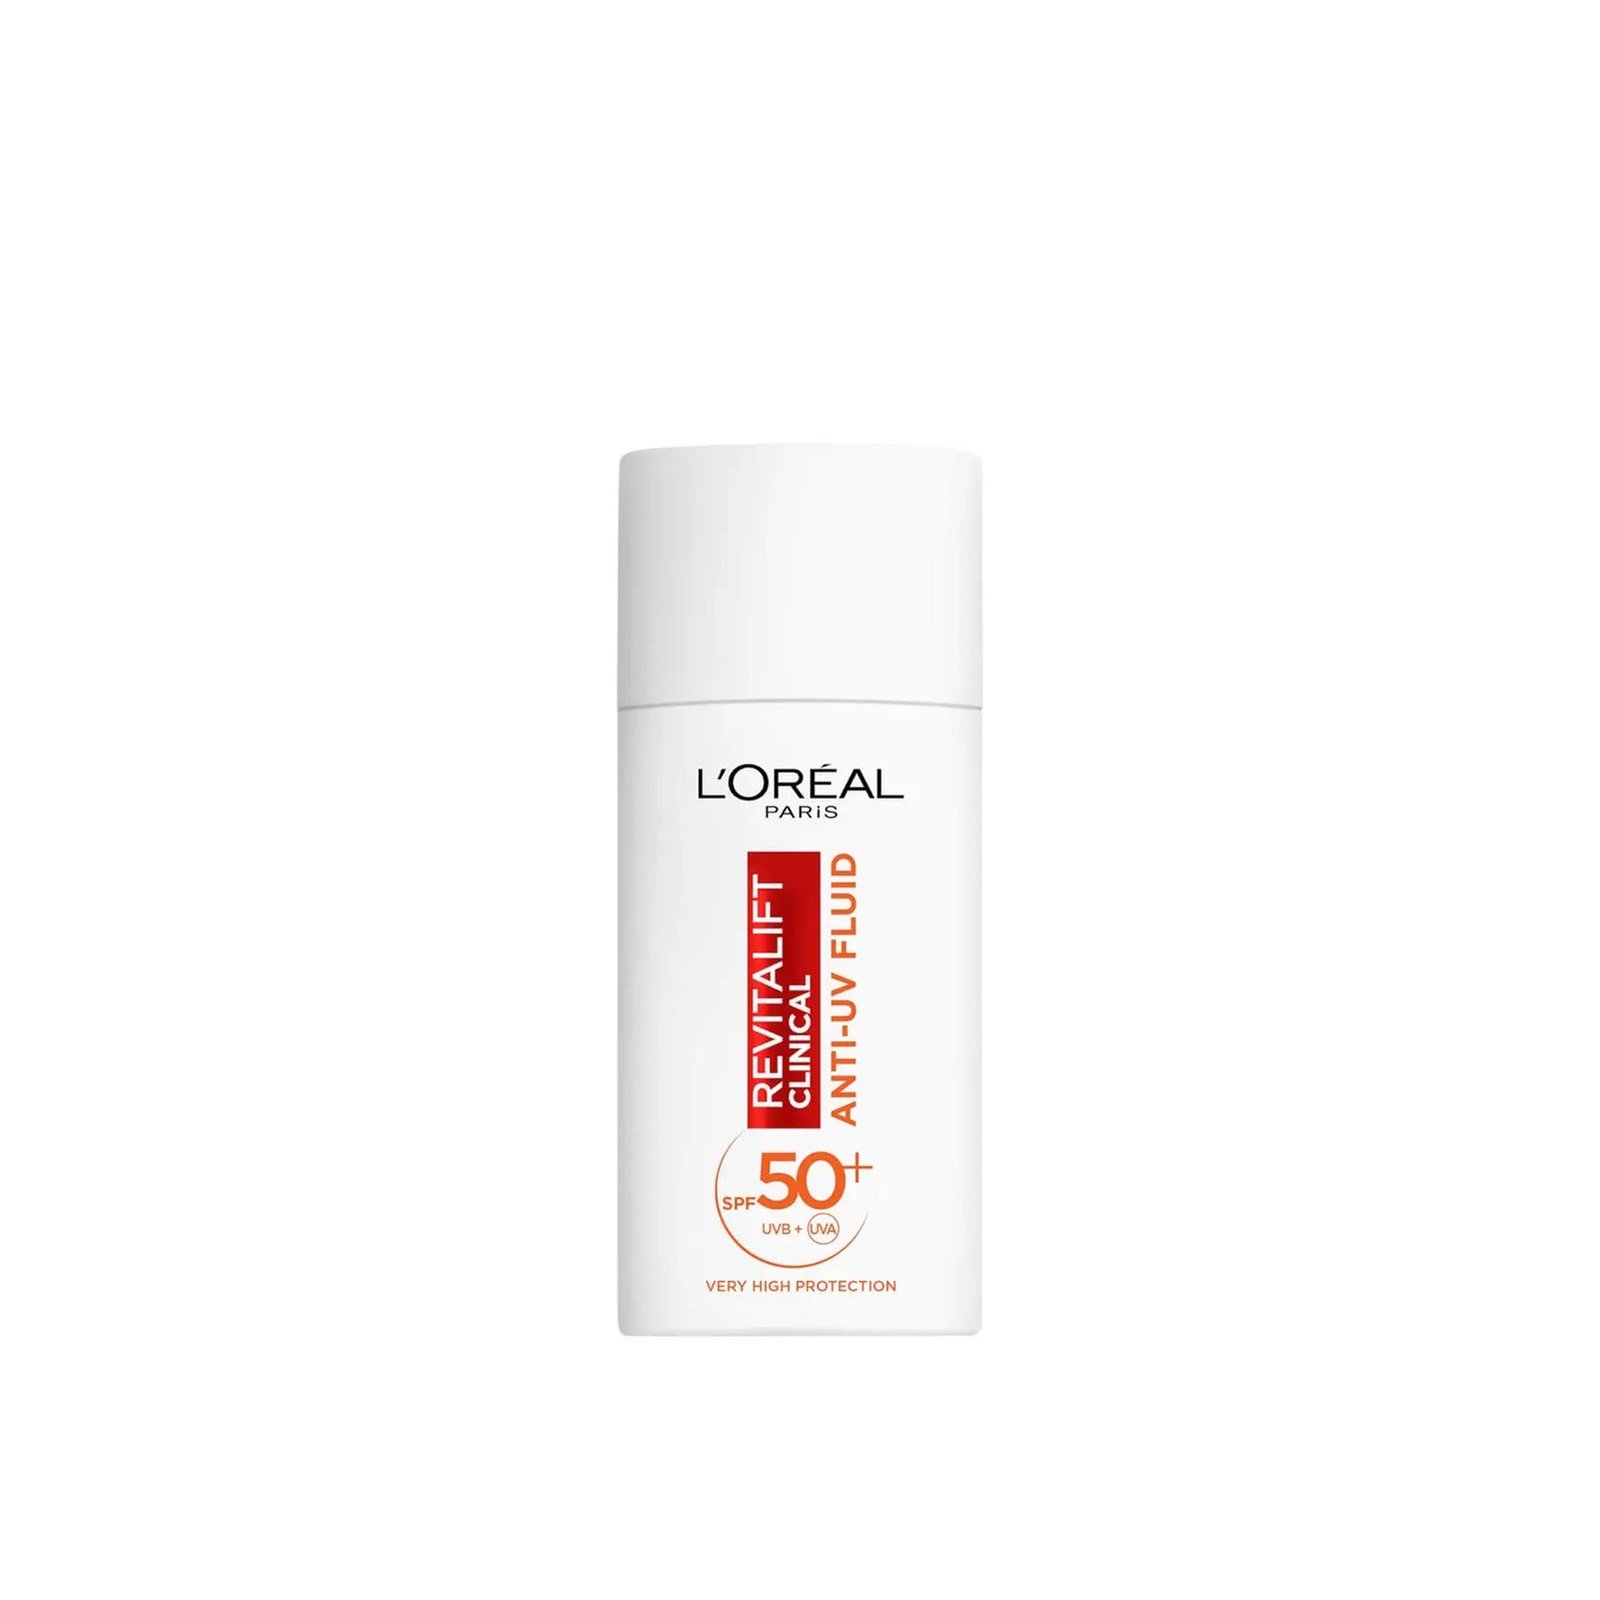 L'Oréal Paris Revitalift Clinical Vitamin C UV Fluid SPF50+ 50ml (1.69 fl oz)